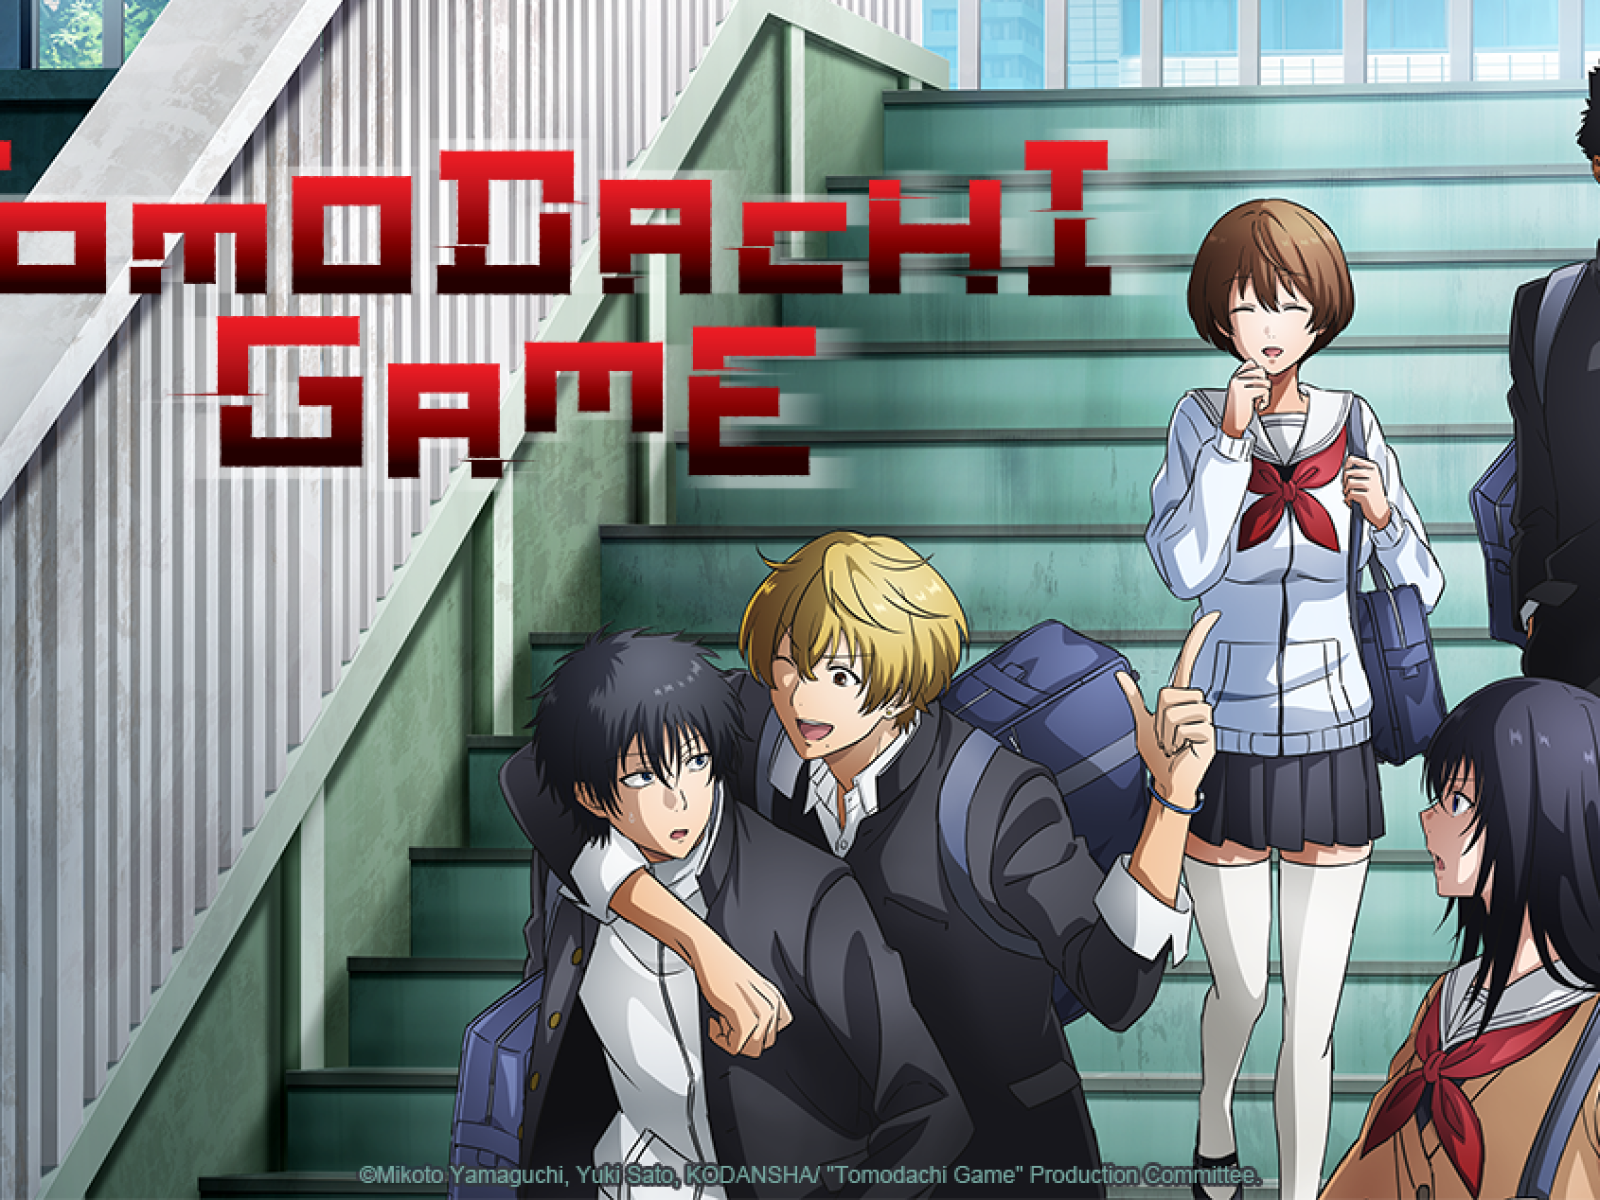 Tomodachi Game' Episode 12 Live Stream Details: Weak Win Game [Spoilers]